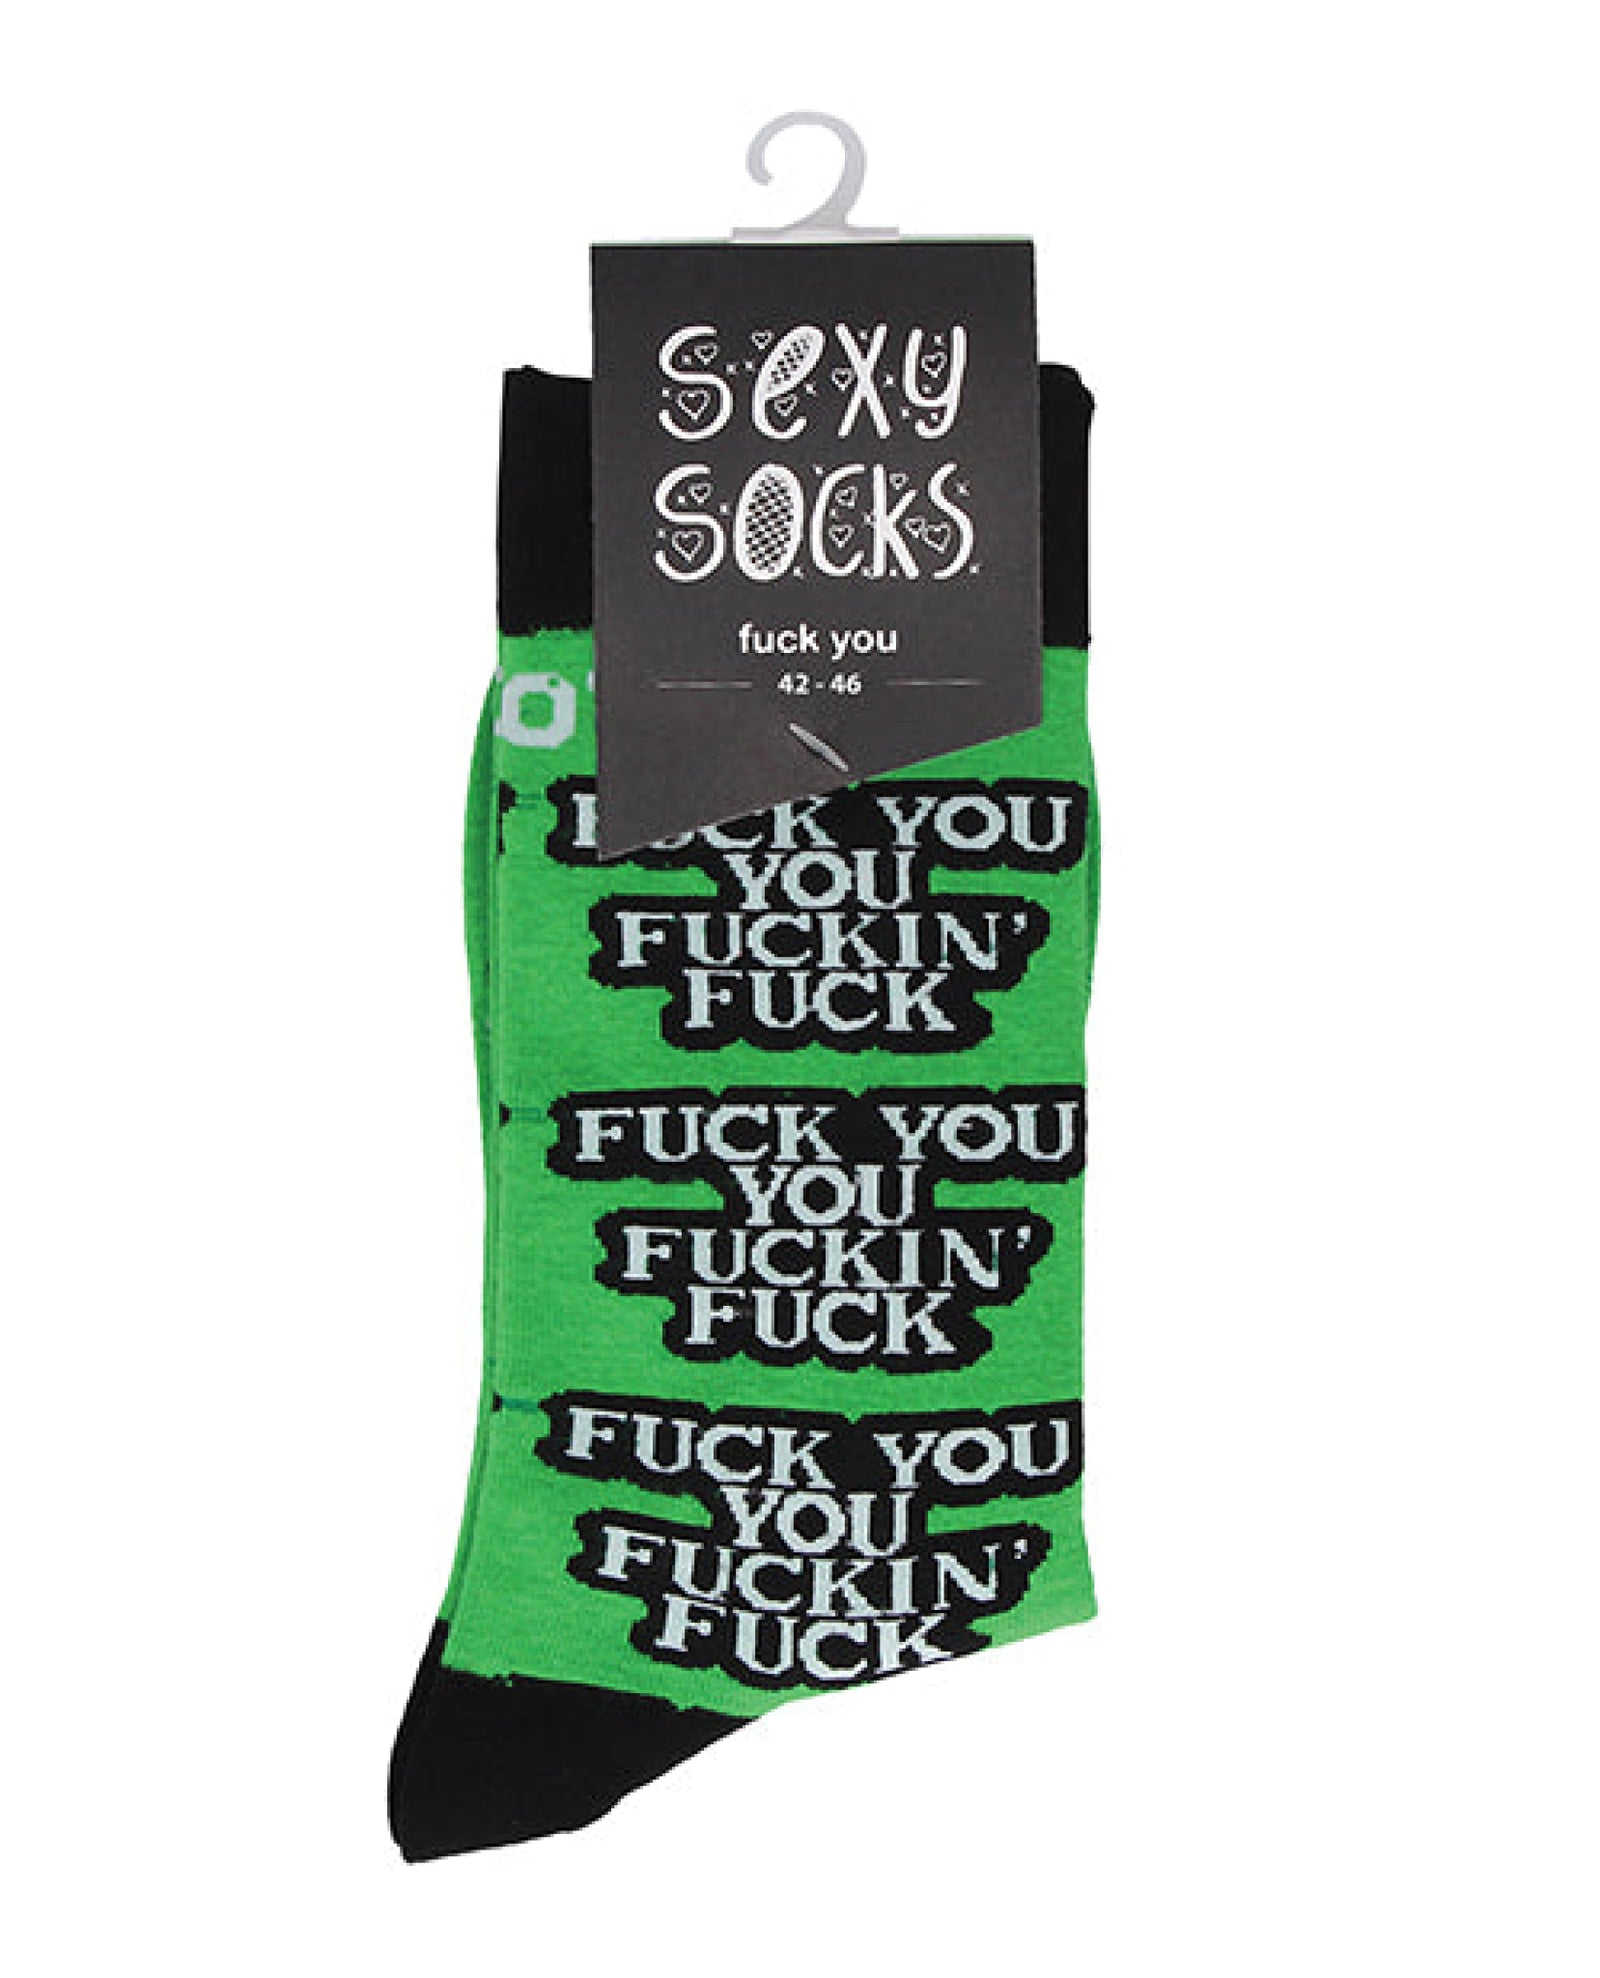 Shots Sexy Socks Fuck You - Male Shots